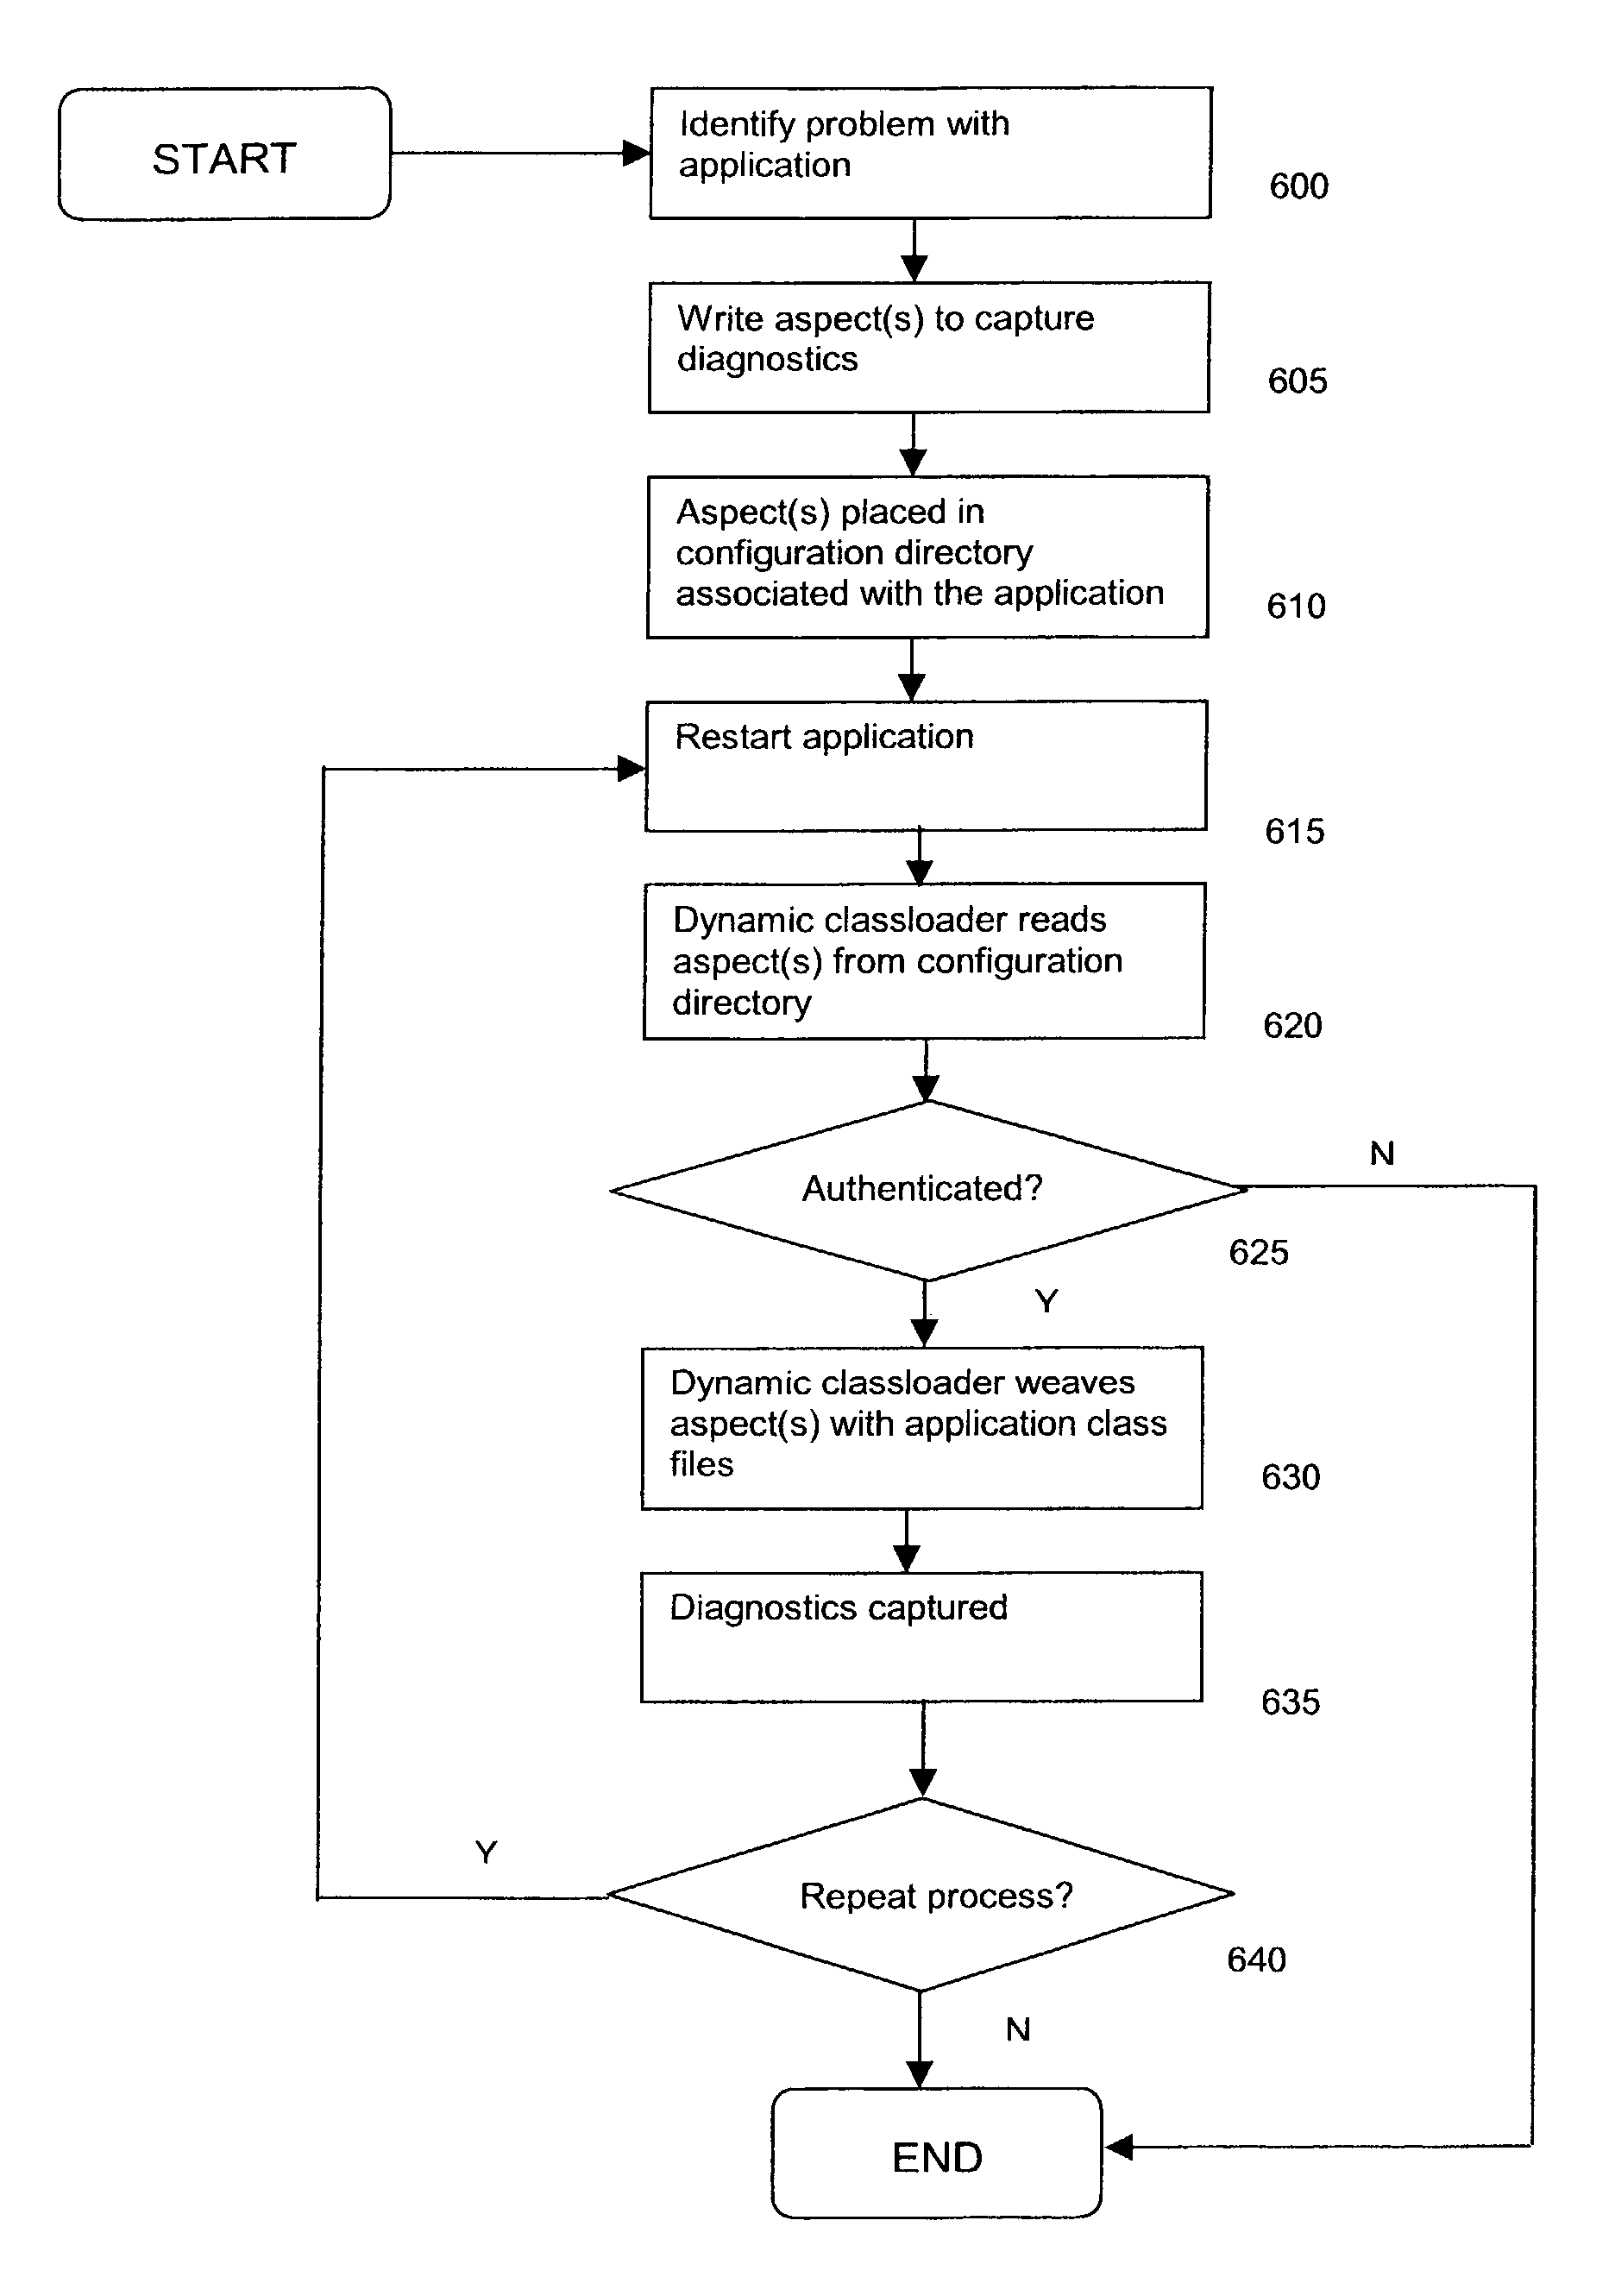 Method for capturing computer application diagnostics